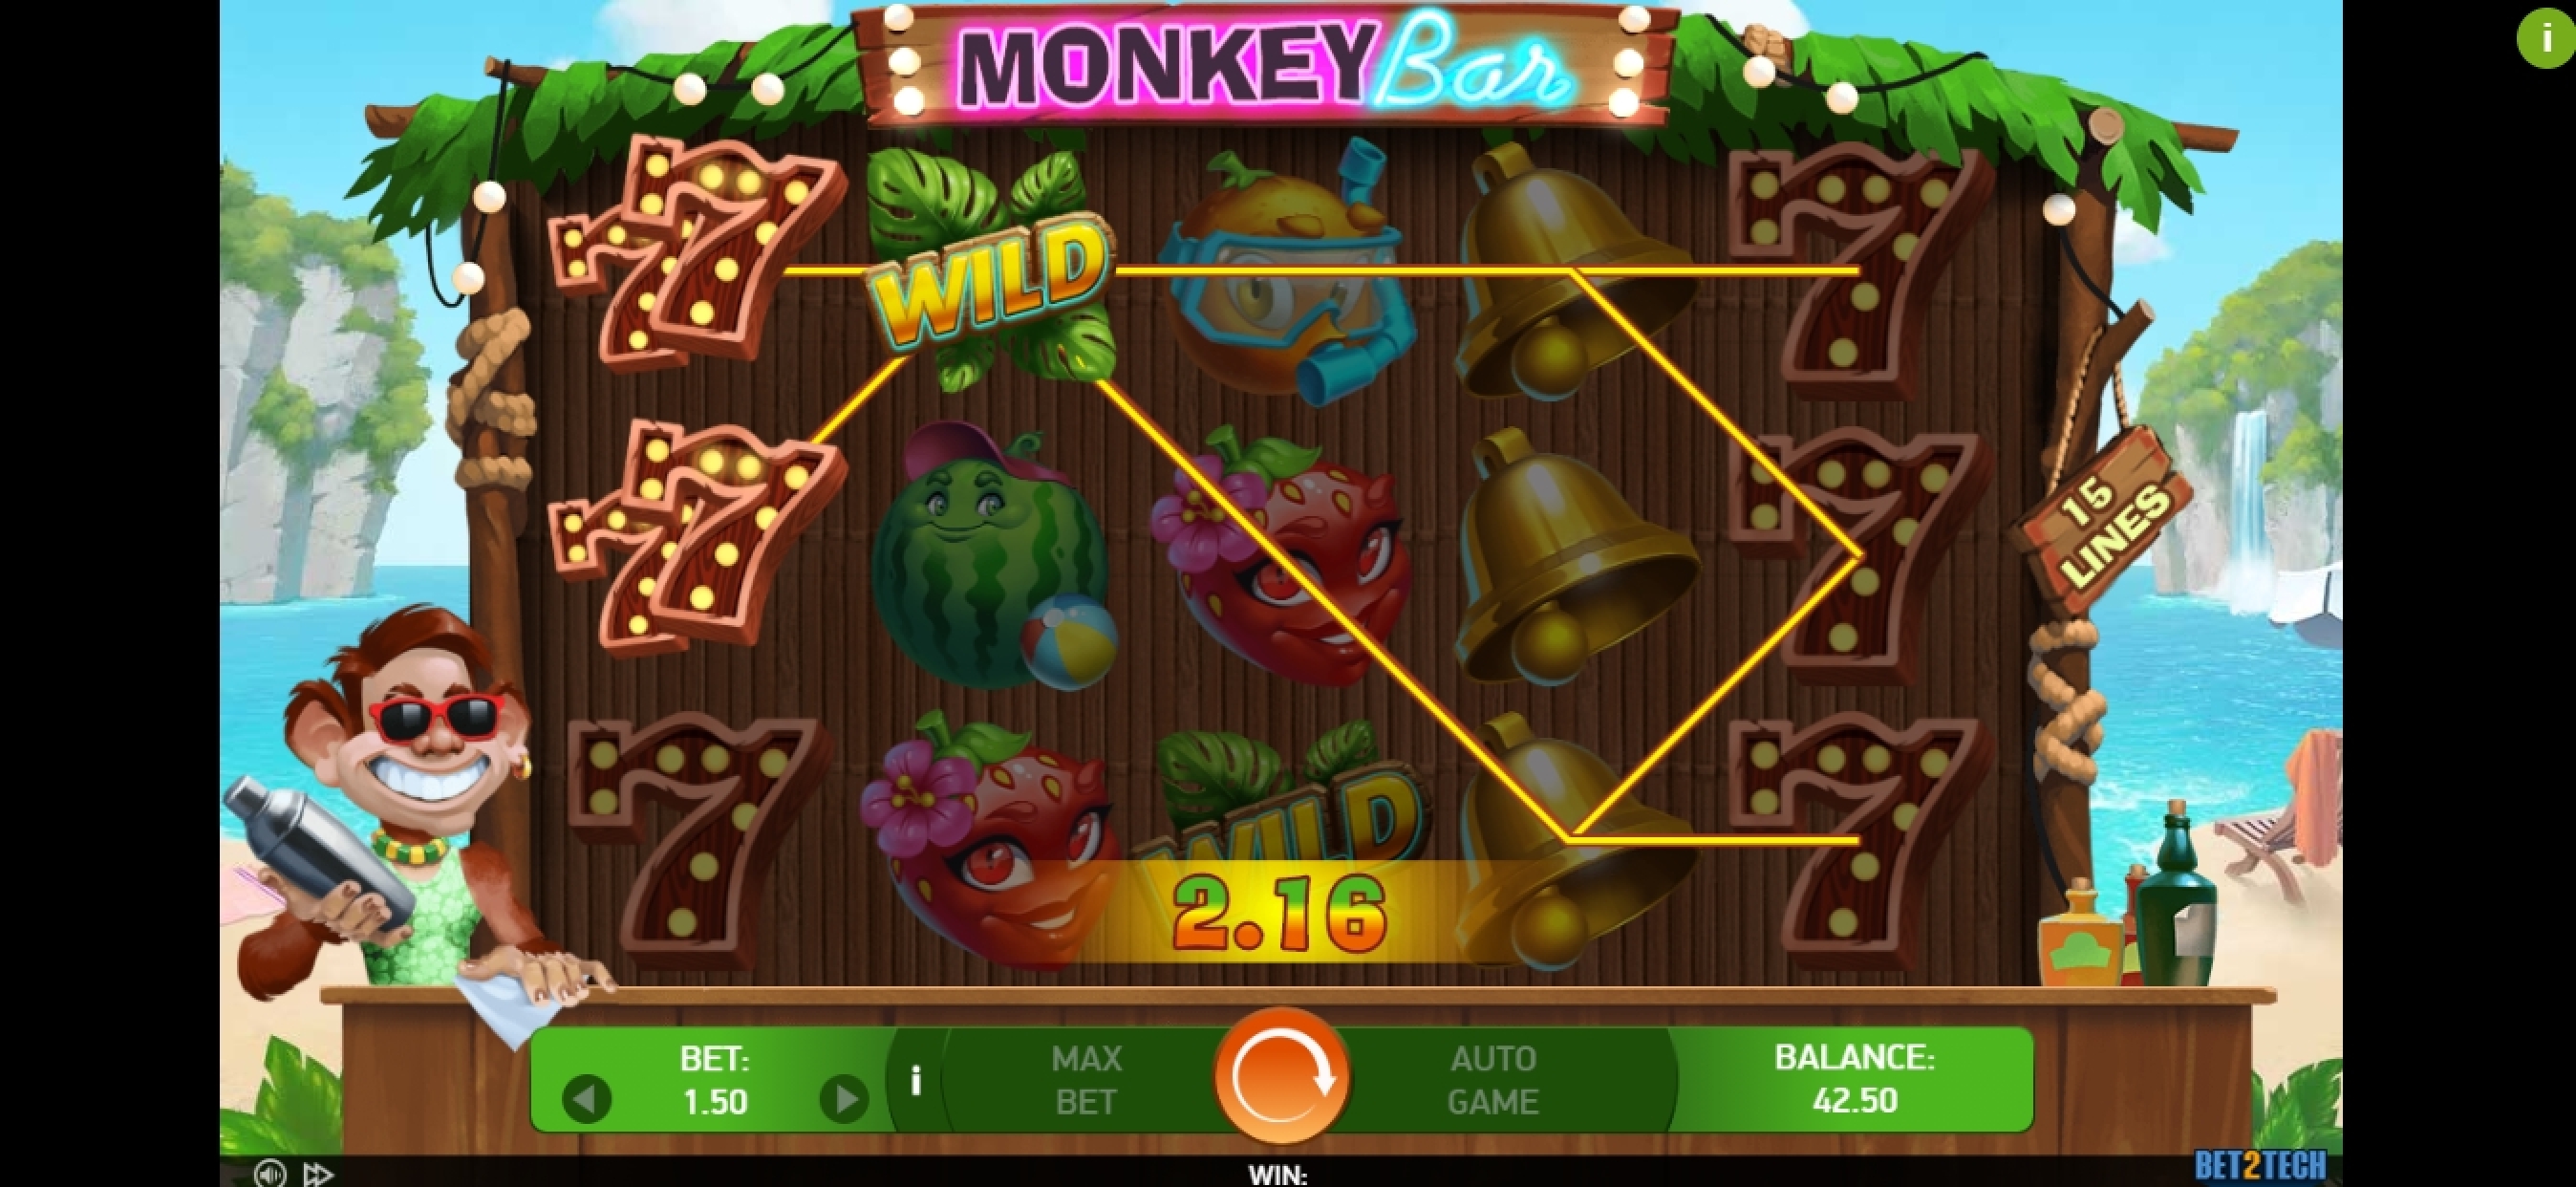 Win Money in Monkey Bar Free Slot Game by Bet2Tech